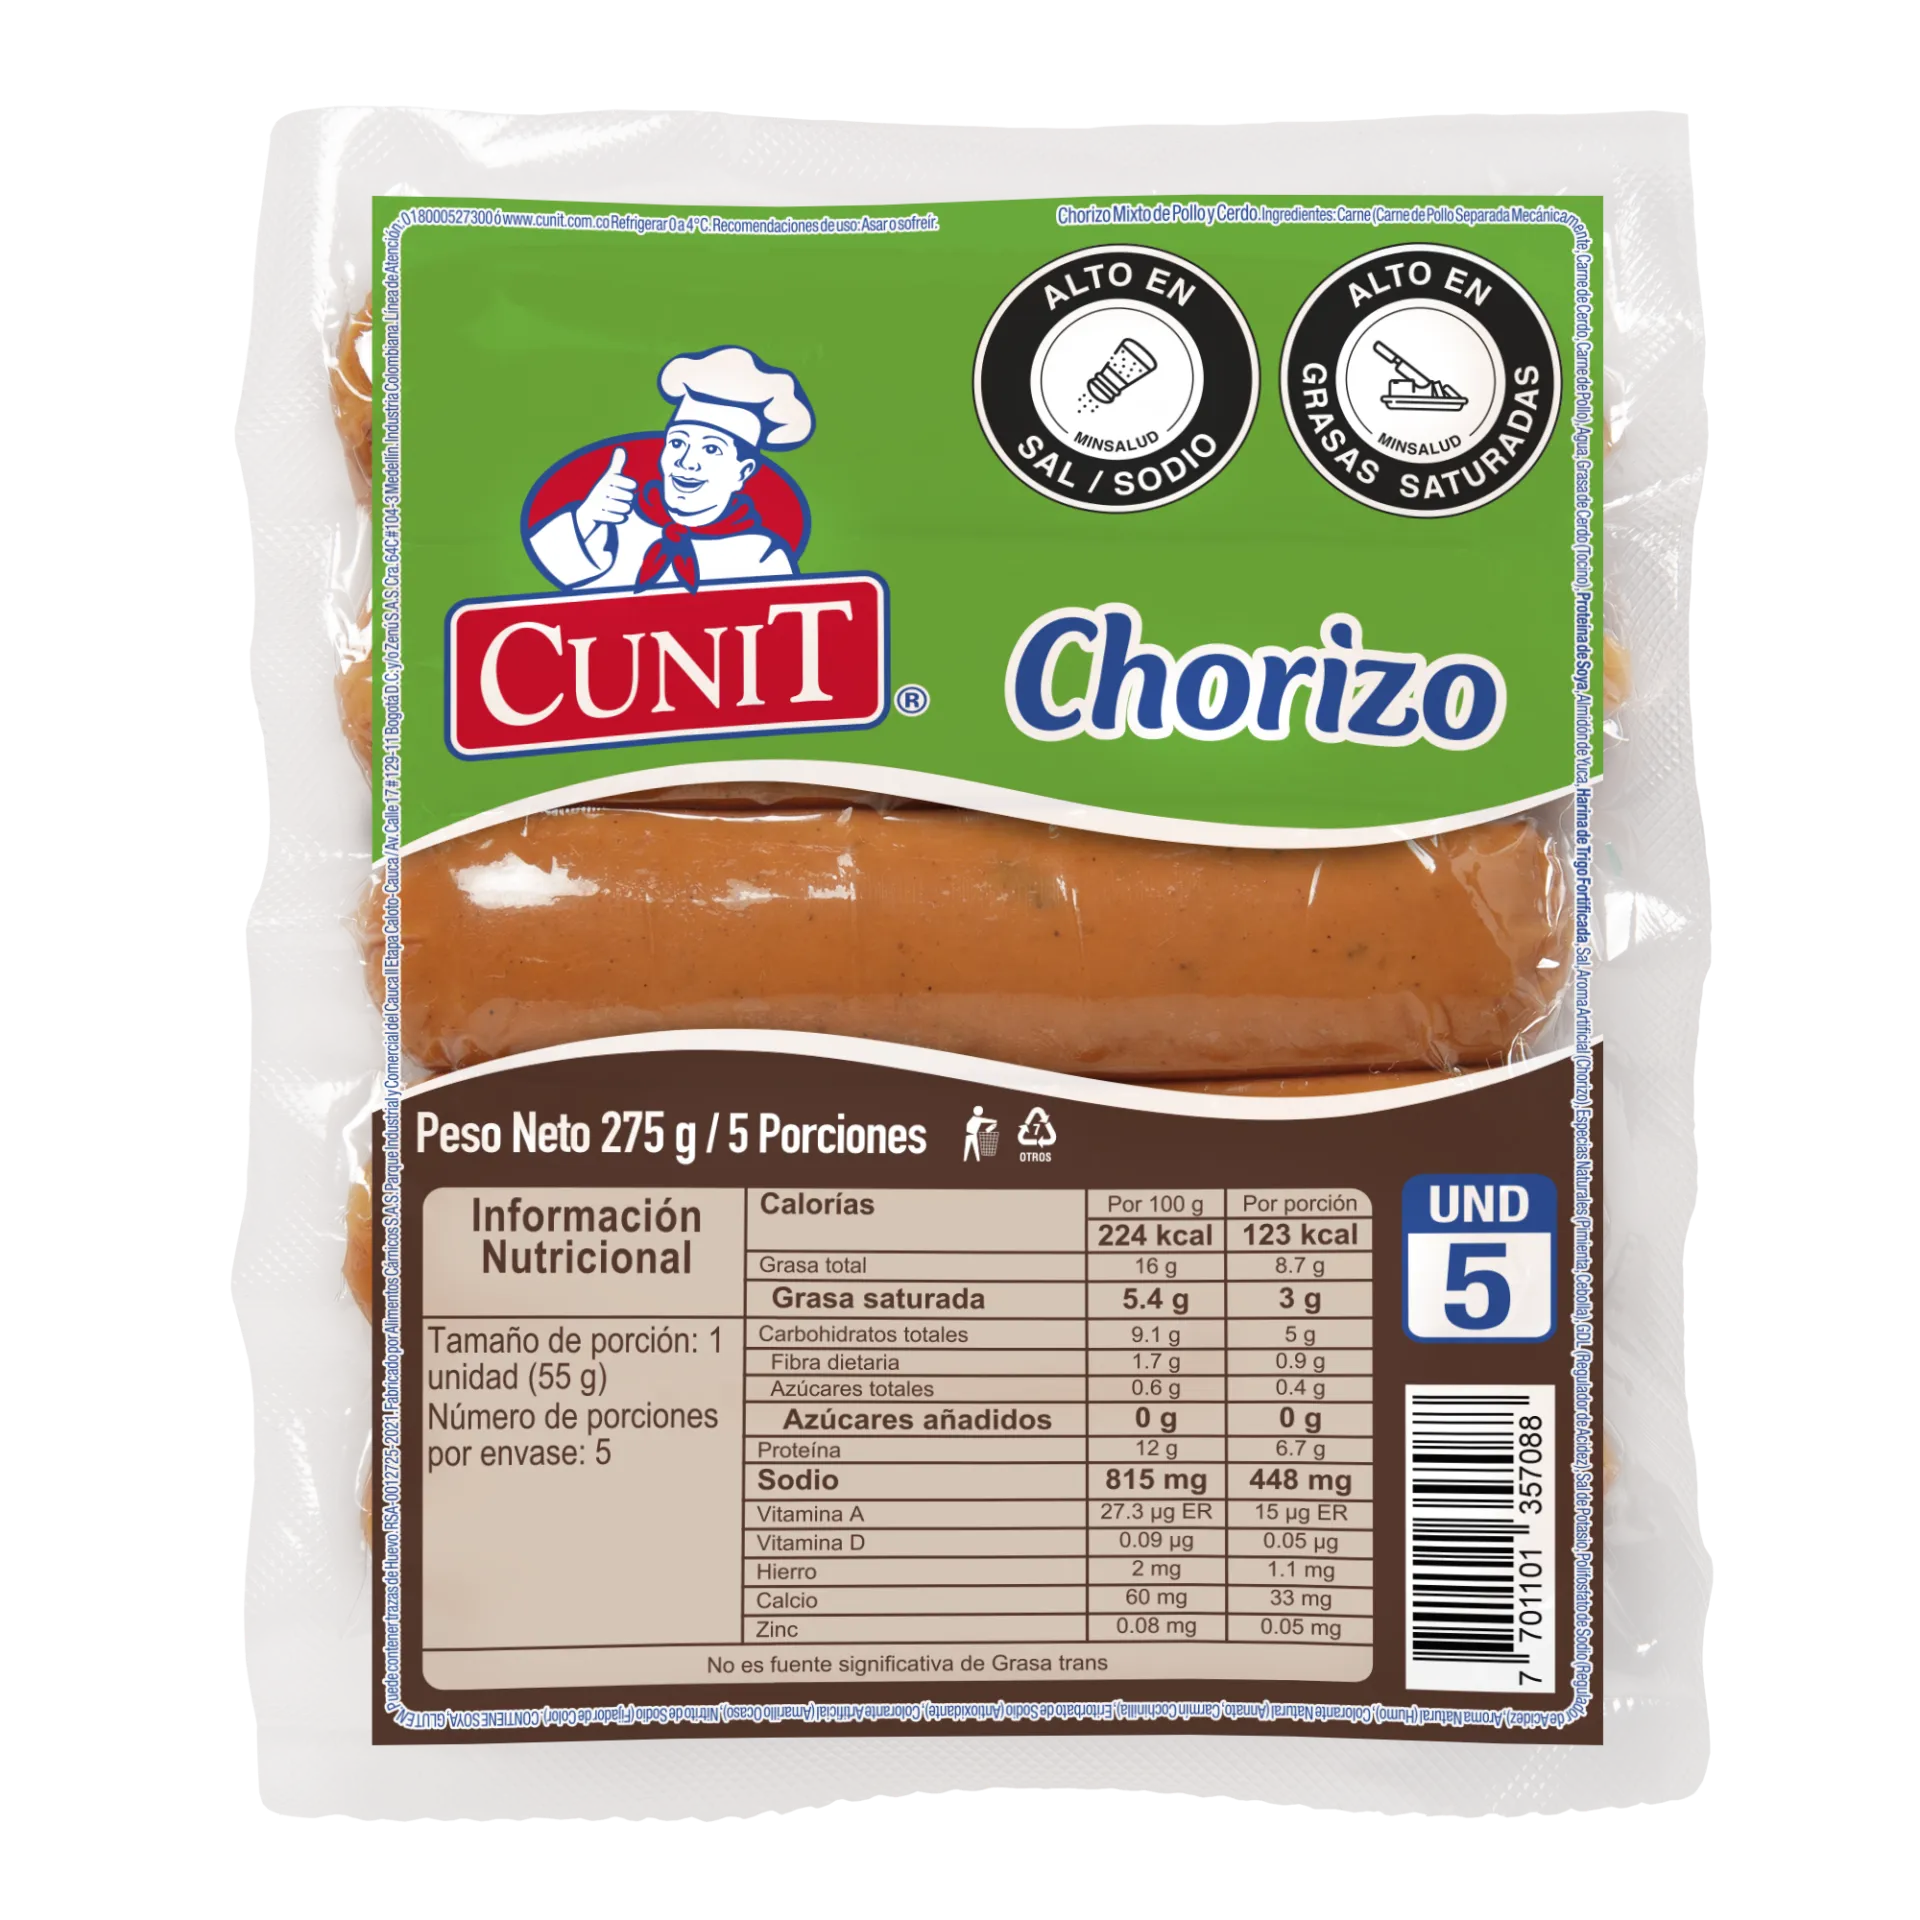 Chorizo cunit